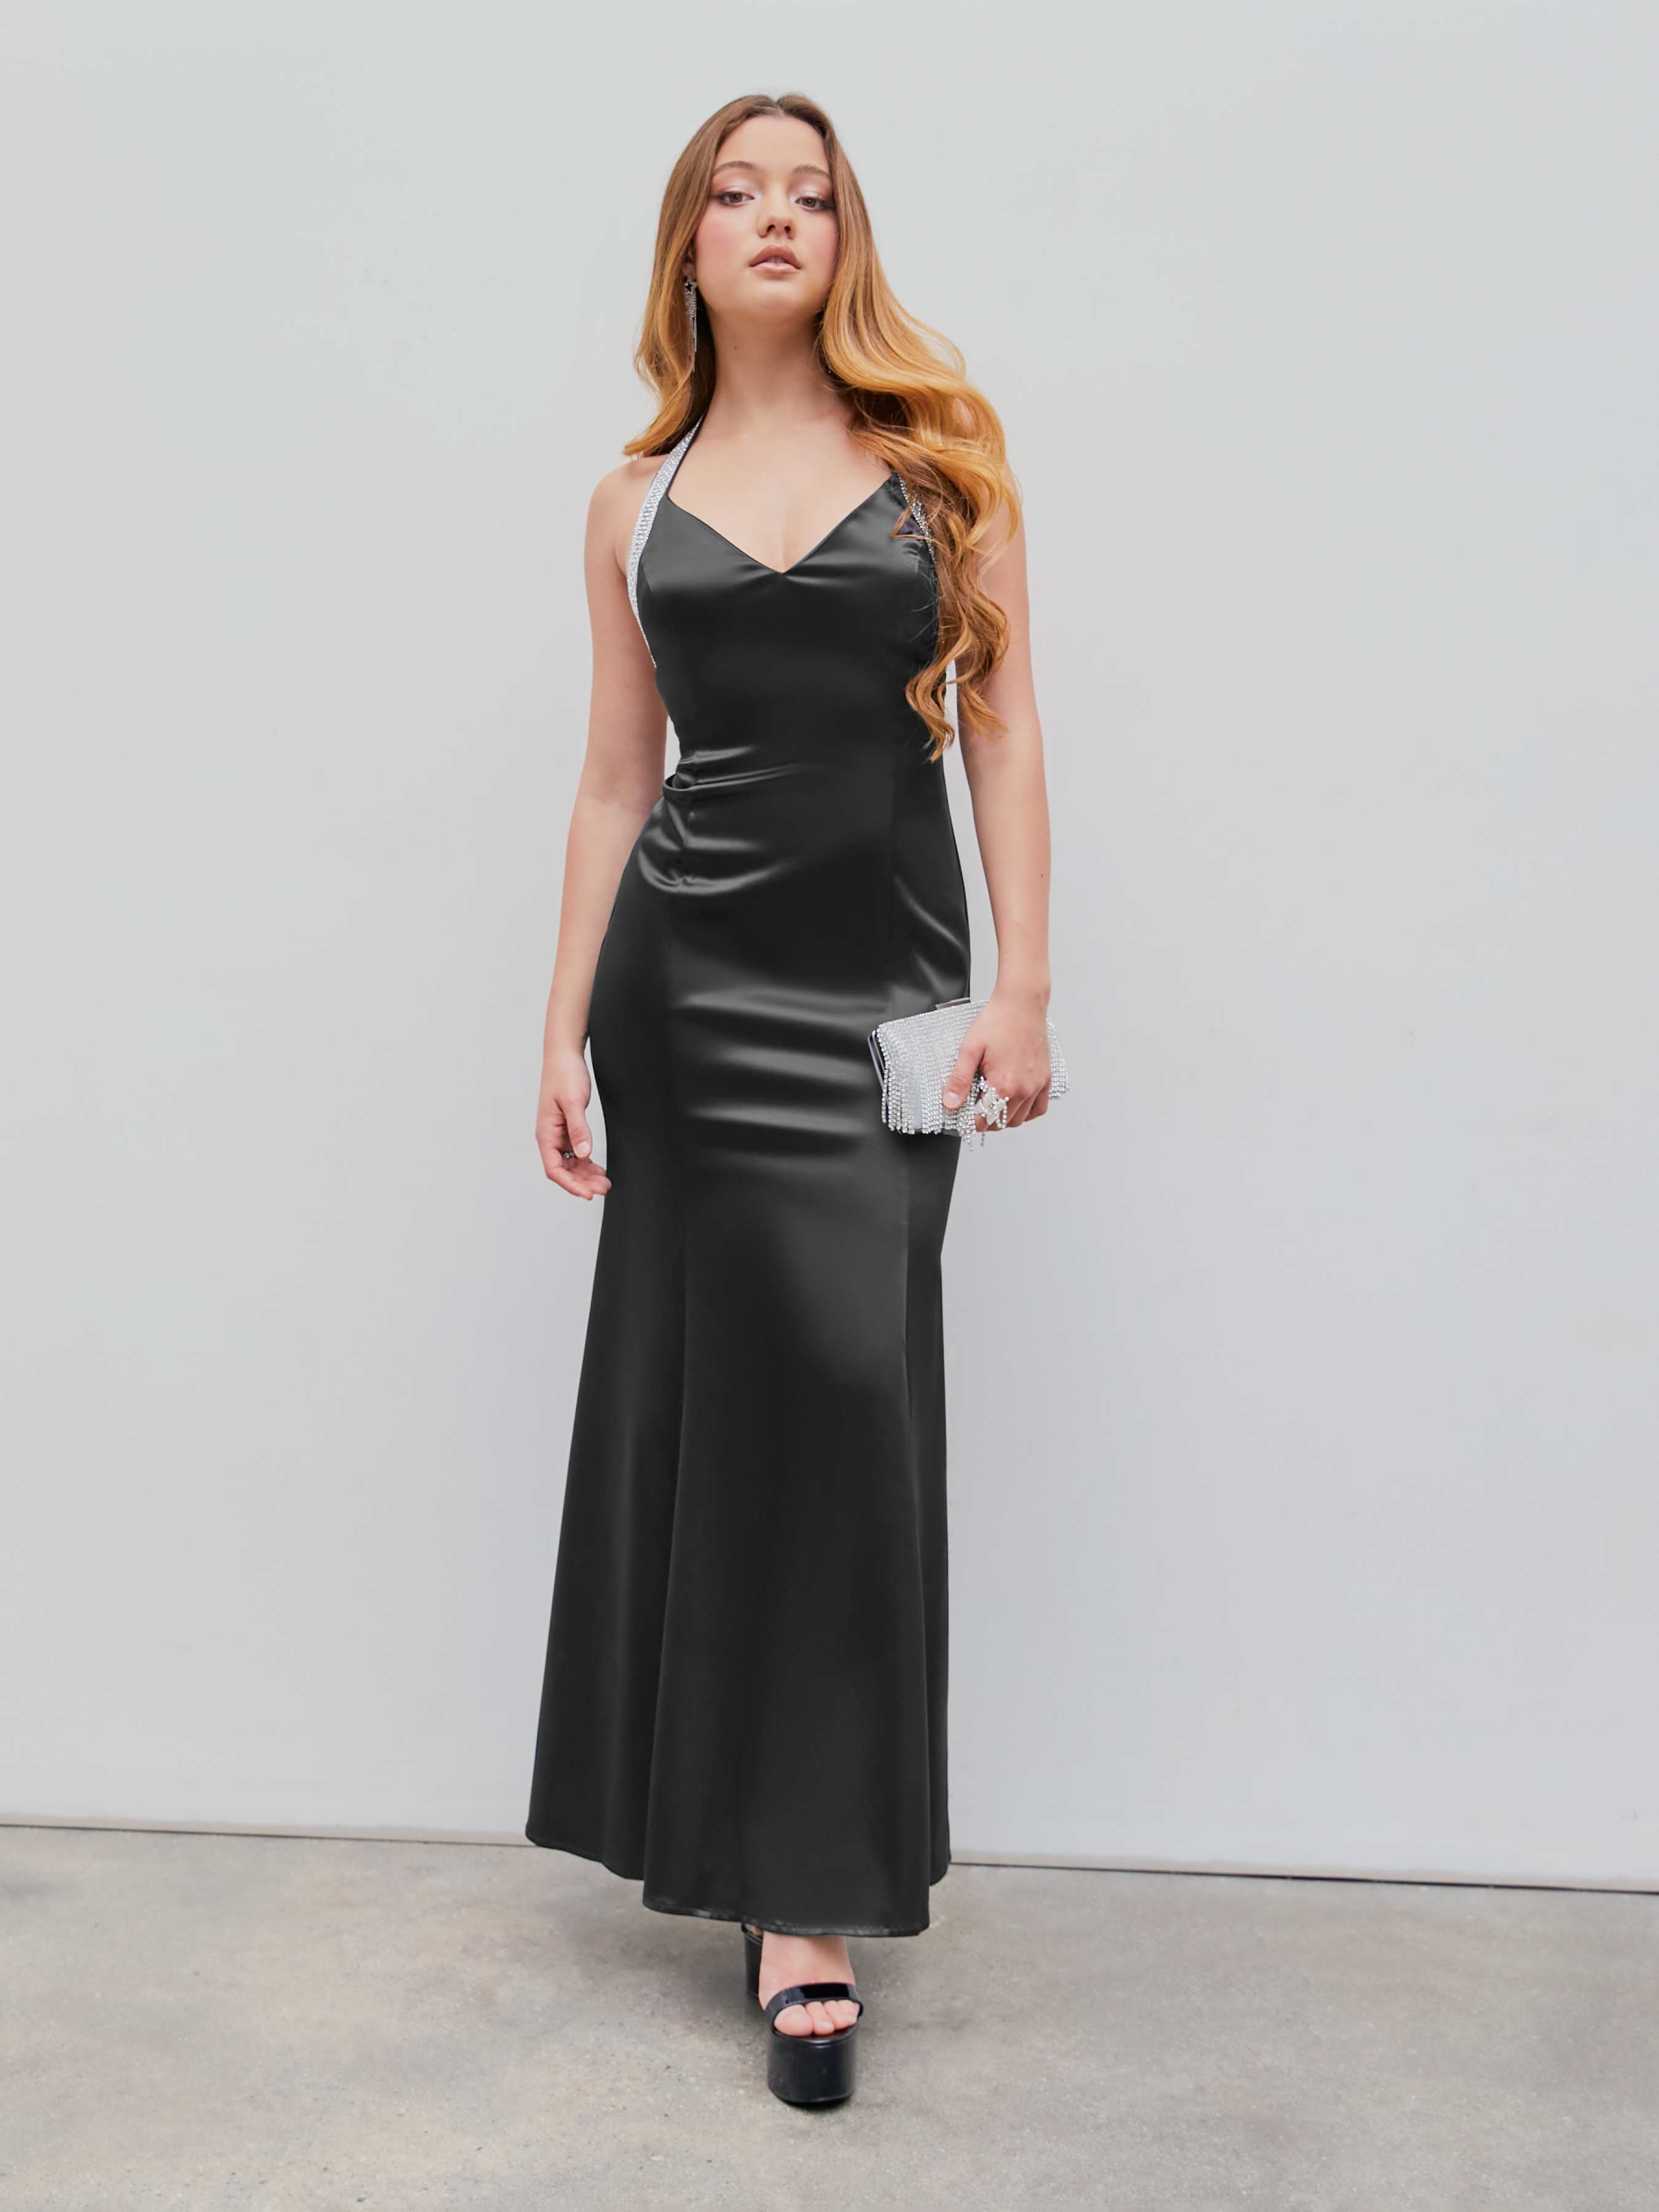 Silk Solid Halter Rhinestone Maxi Dress For Partyclubbing 4575